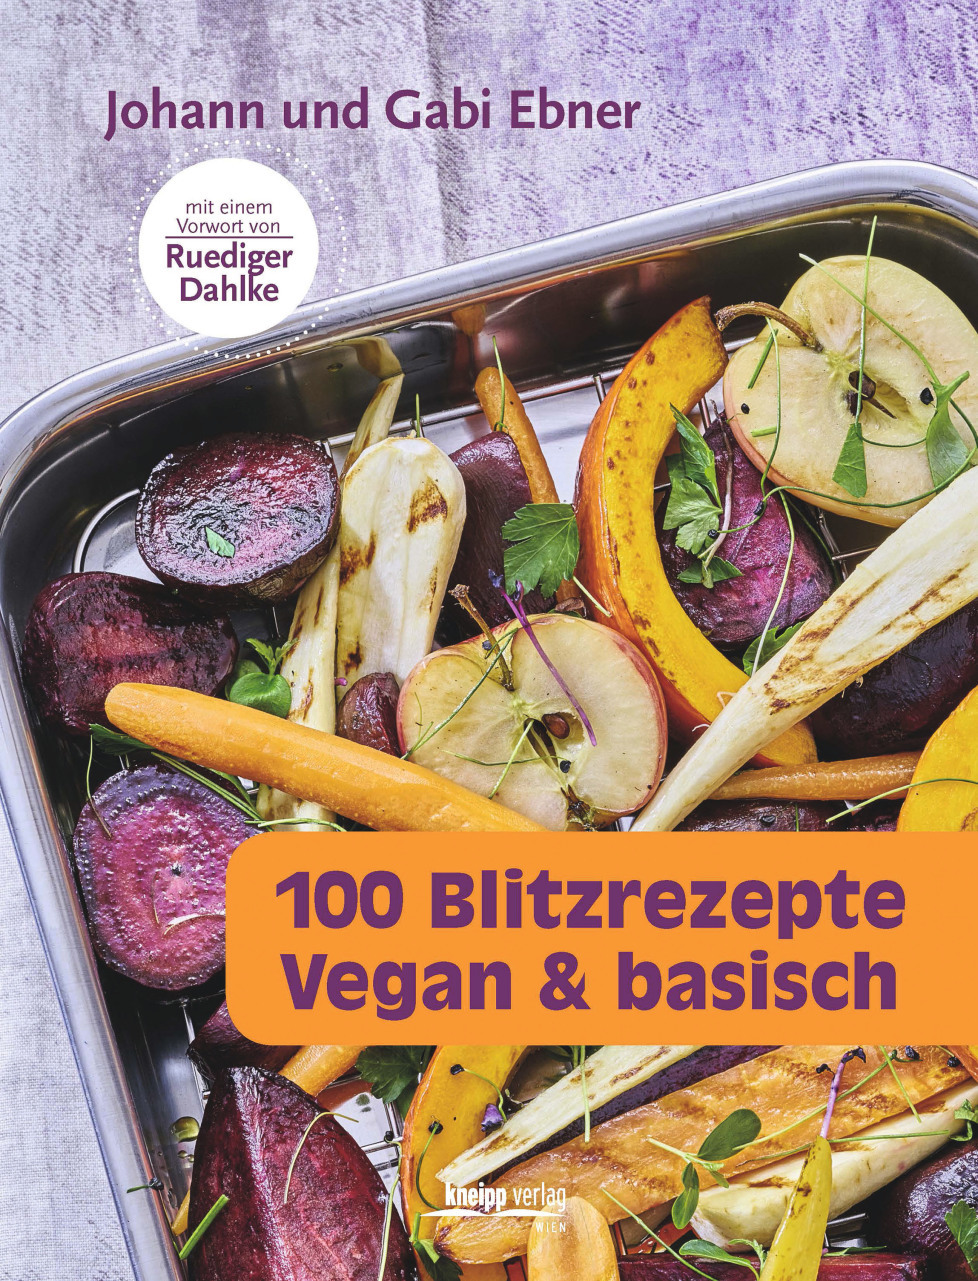 100 Blitzrezepte Vegan & basisch